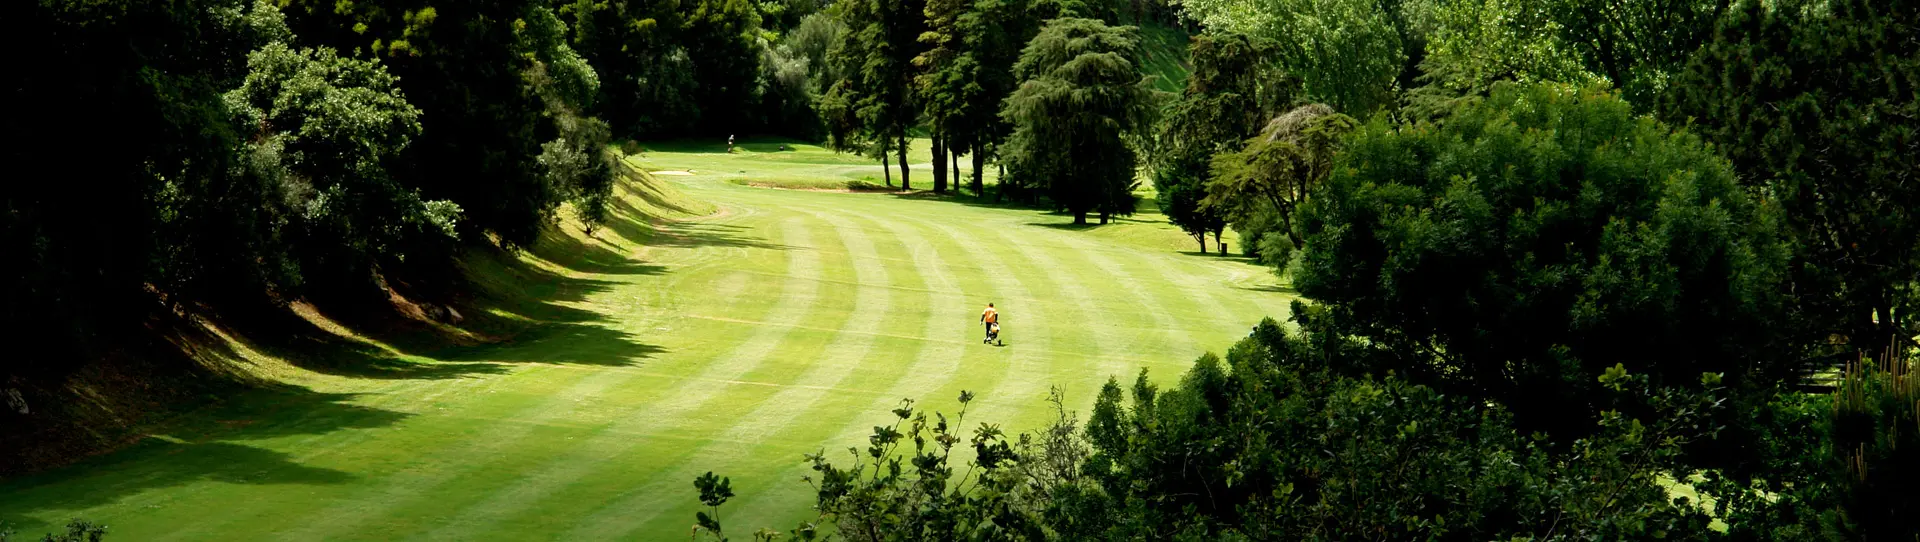 Portugal golf holidays - Cascais Golden Experience - Photo 3